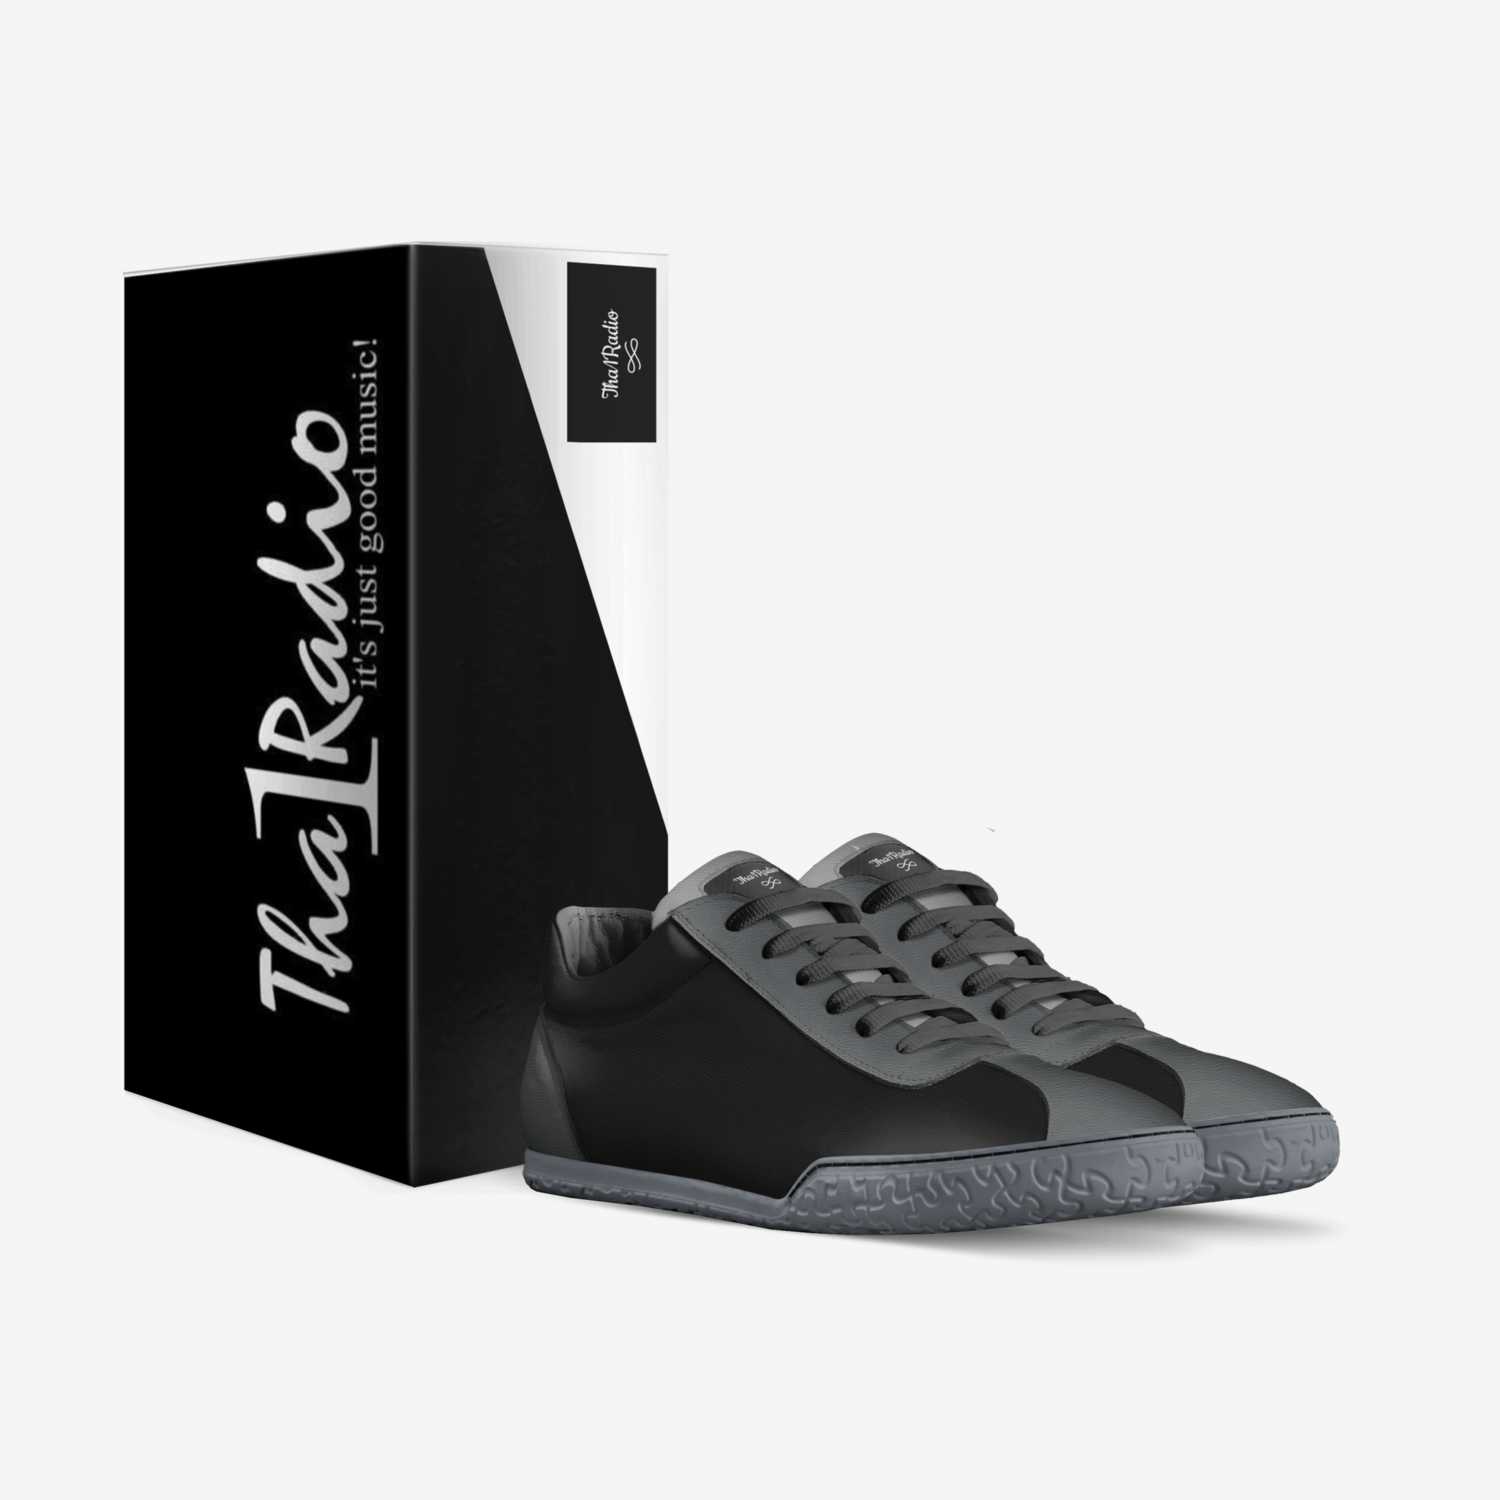 Tha1Radio custom made in Italy shoes by Streetligionllc | Box view